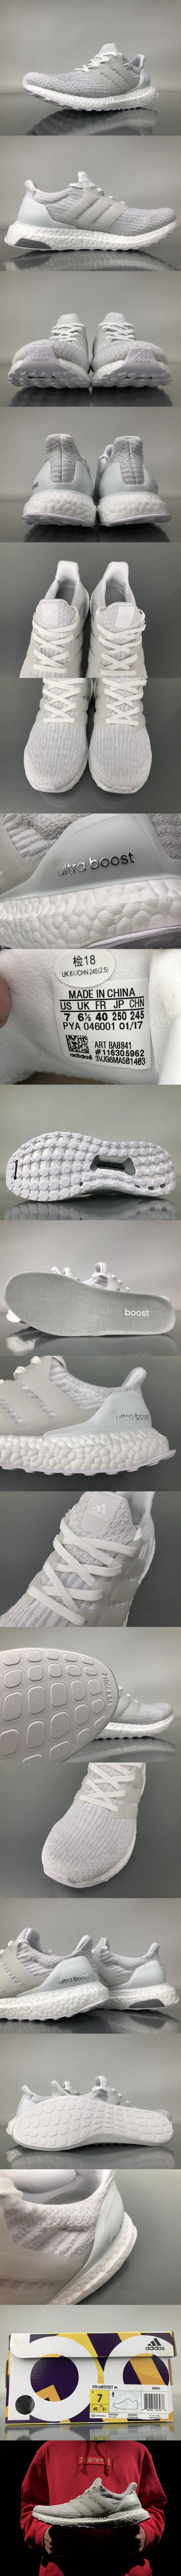 Adidas Ultra Boost 3.0 Triple White Real Boost BA8841 アディダス ウルトラブースト3.0 トリプルホワイト リアルブースト